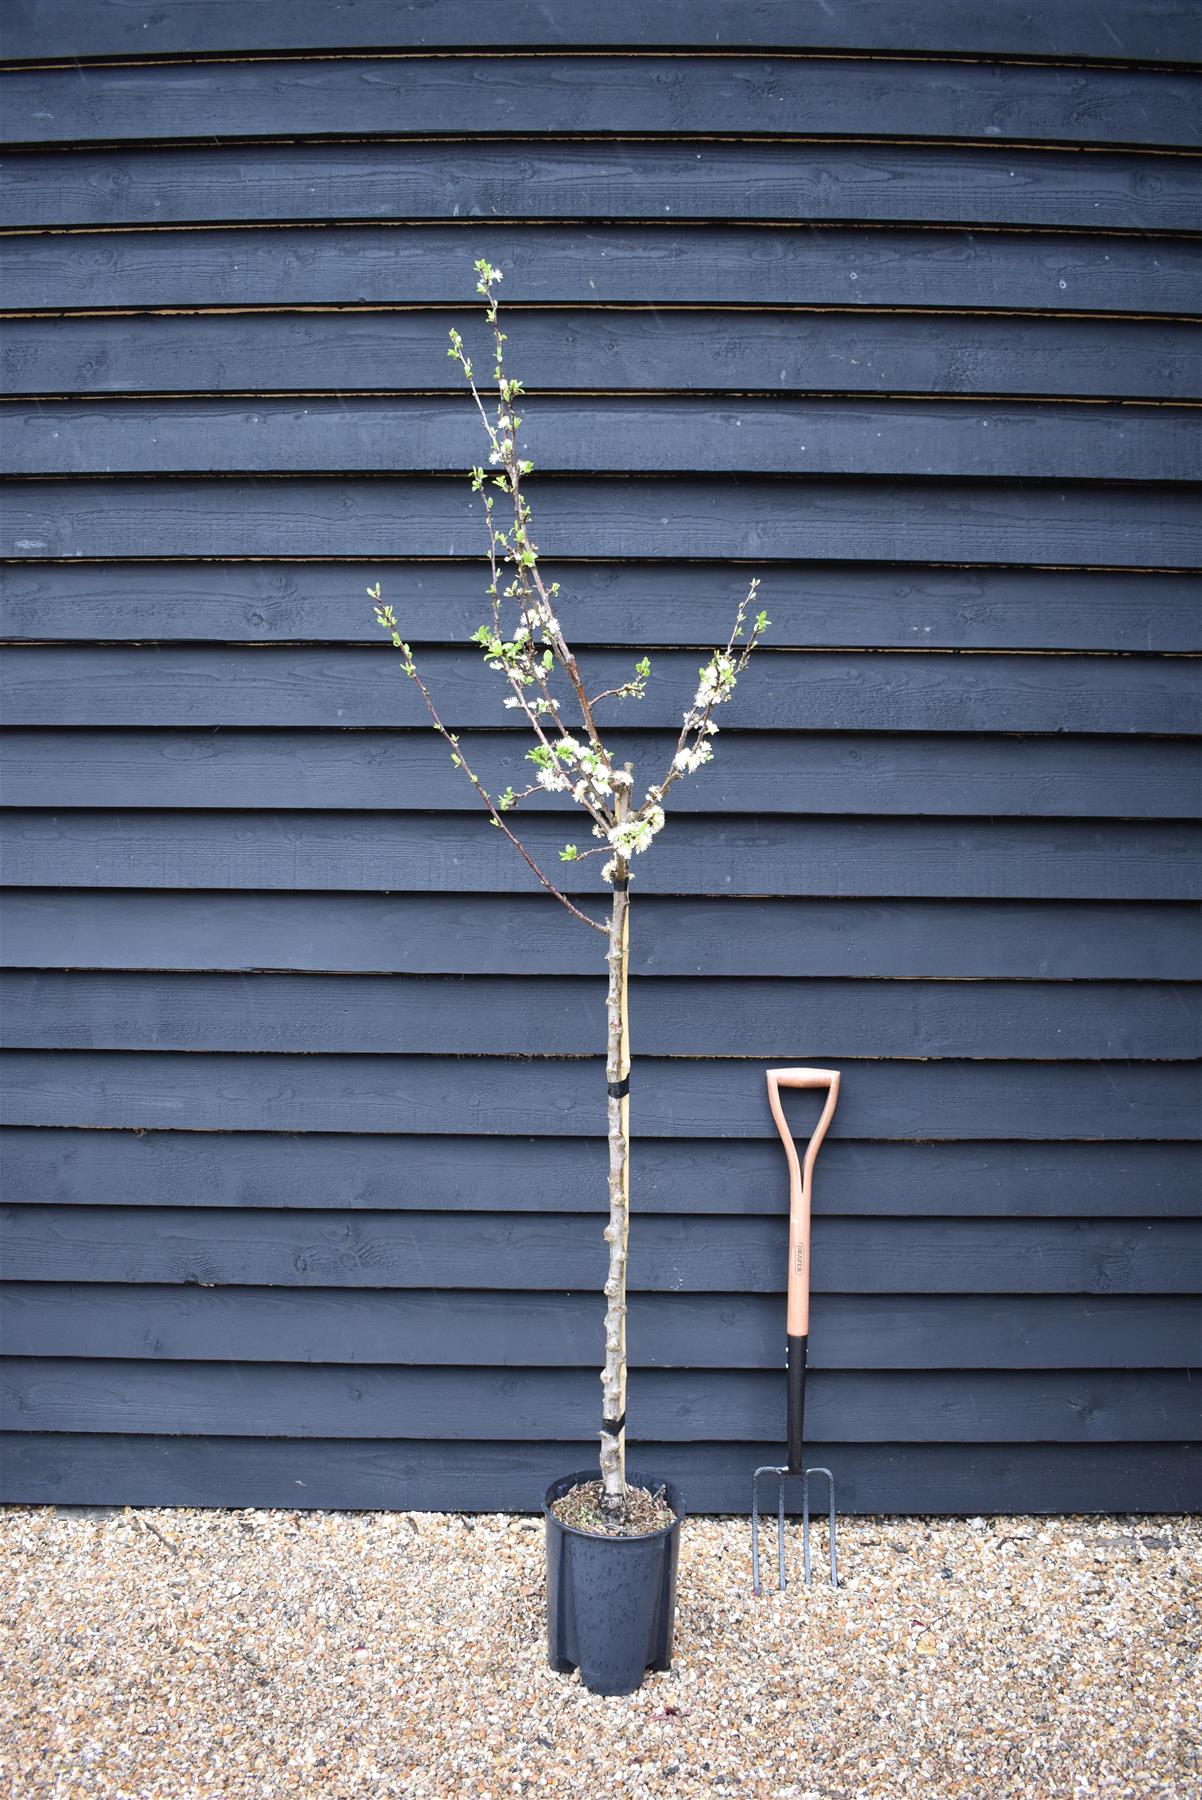 Prunus domestica 'Stanley' | Plum 'Stanley' - 150-200cm, 10lt